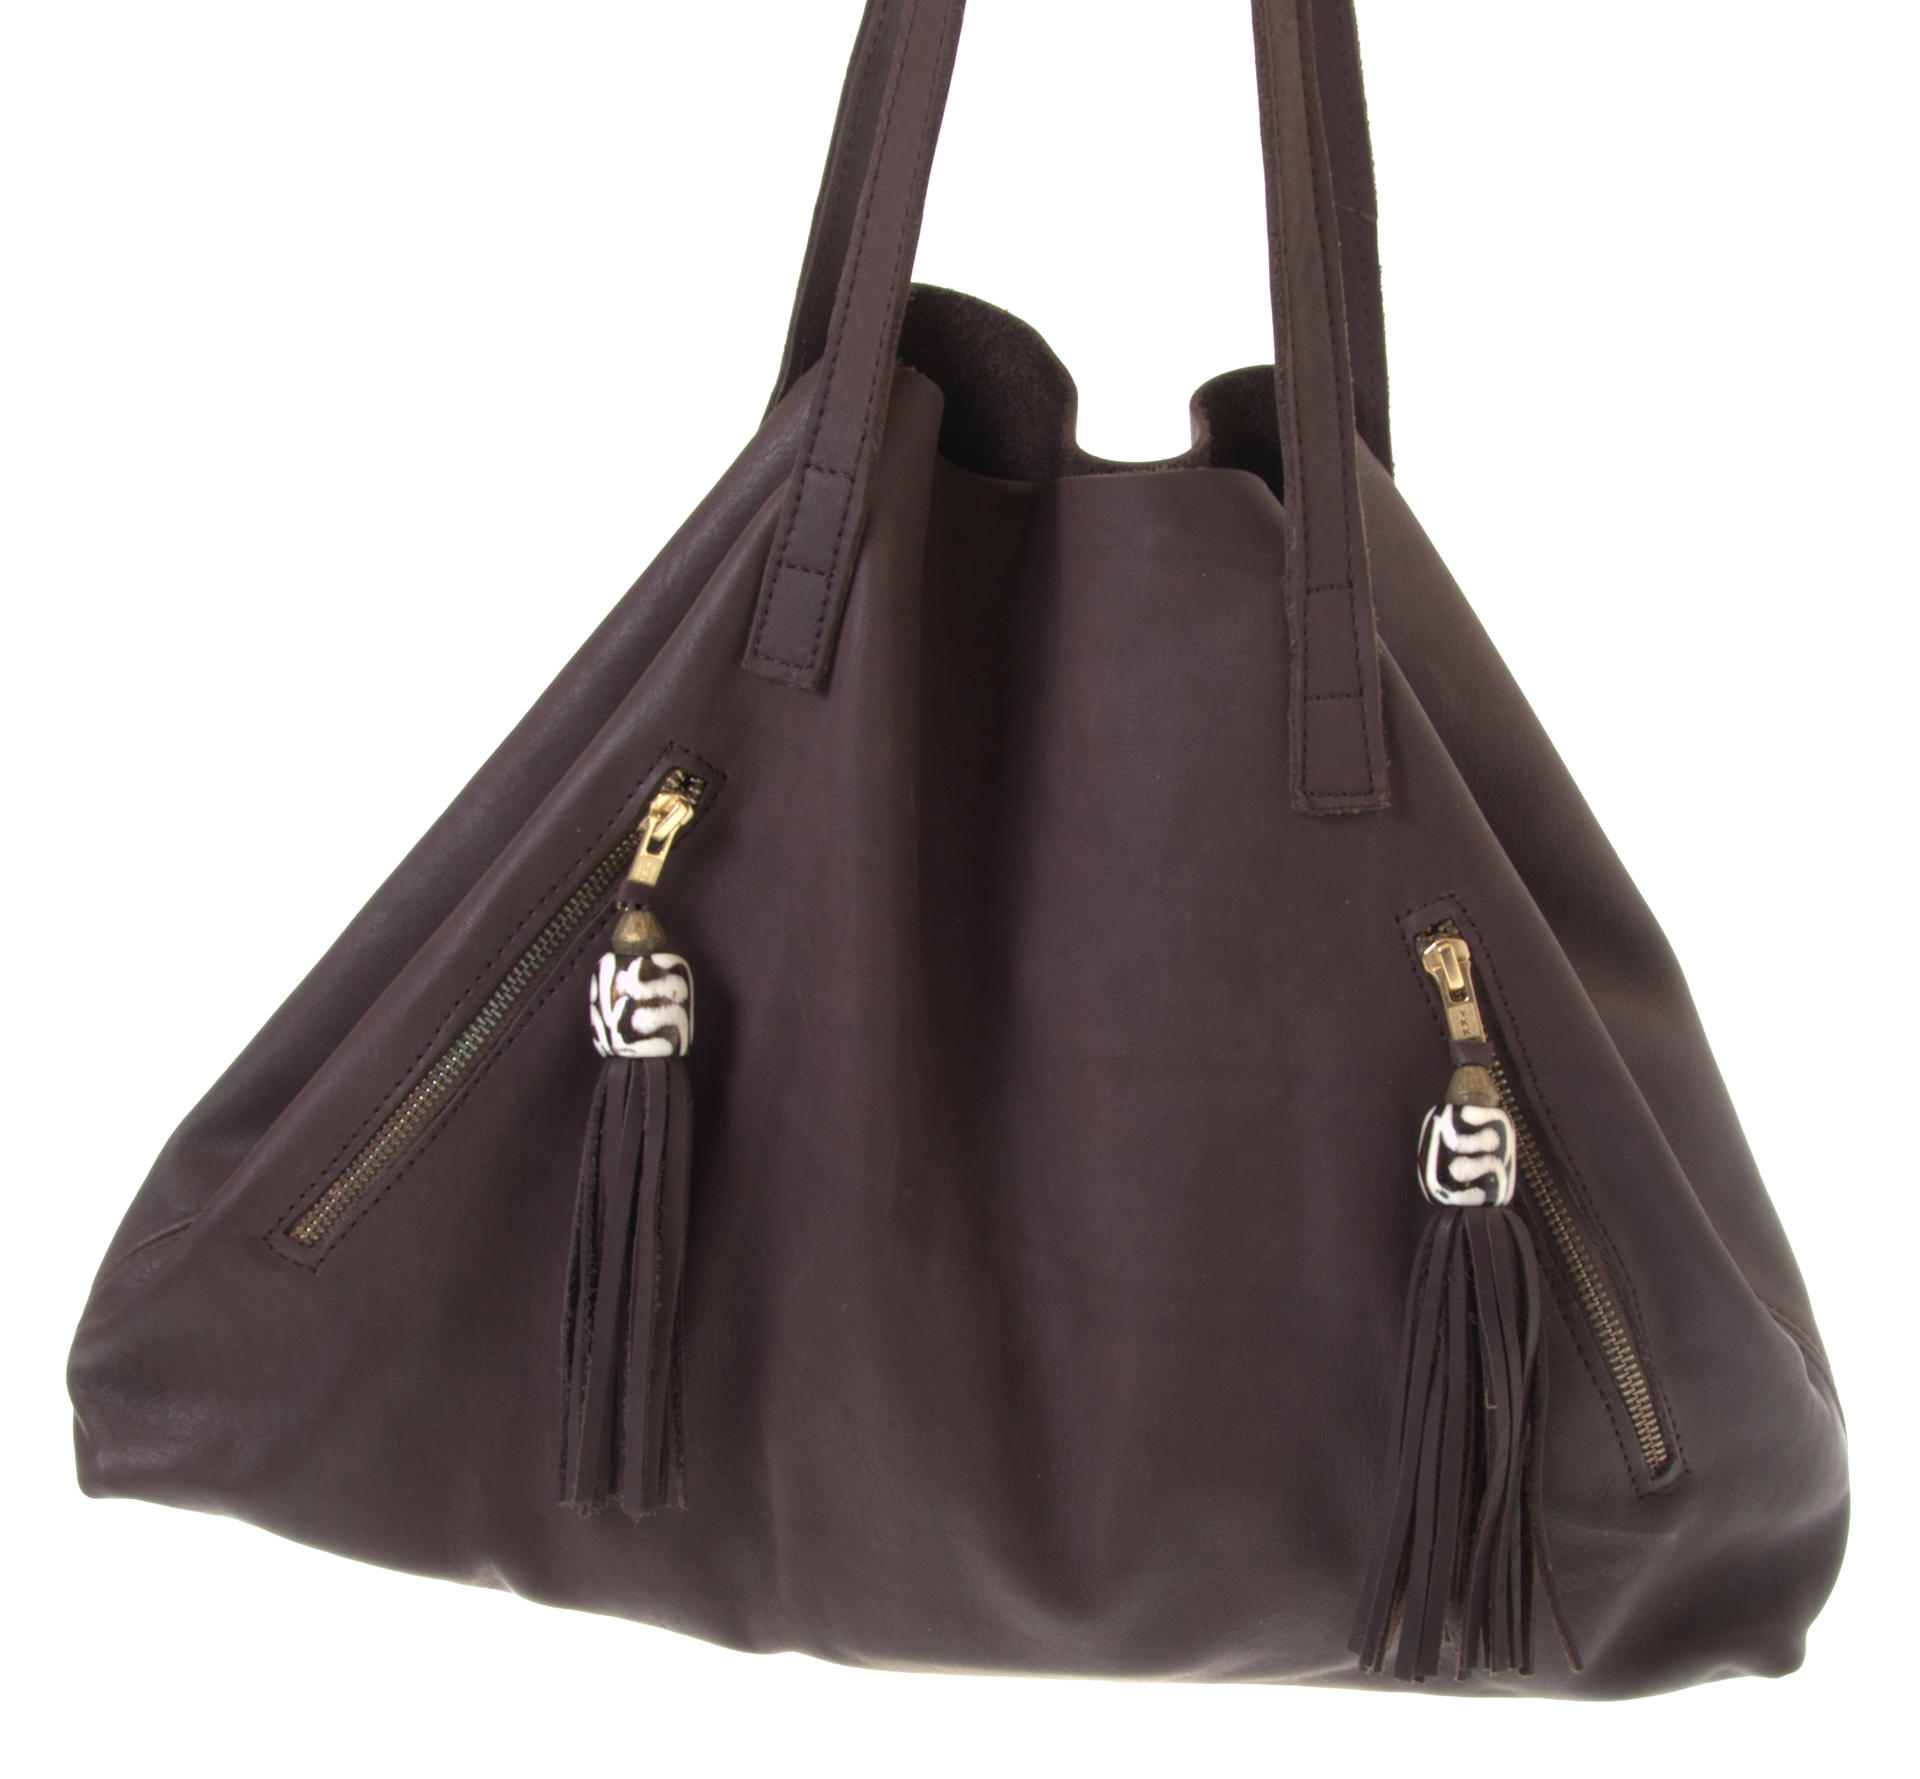 Nicola Zip Bag - Fine Cow Leather Bag from Zambia | Gundara